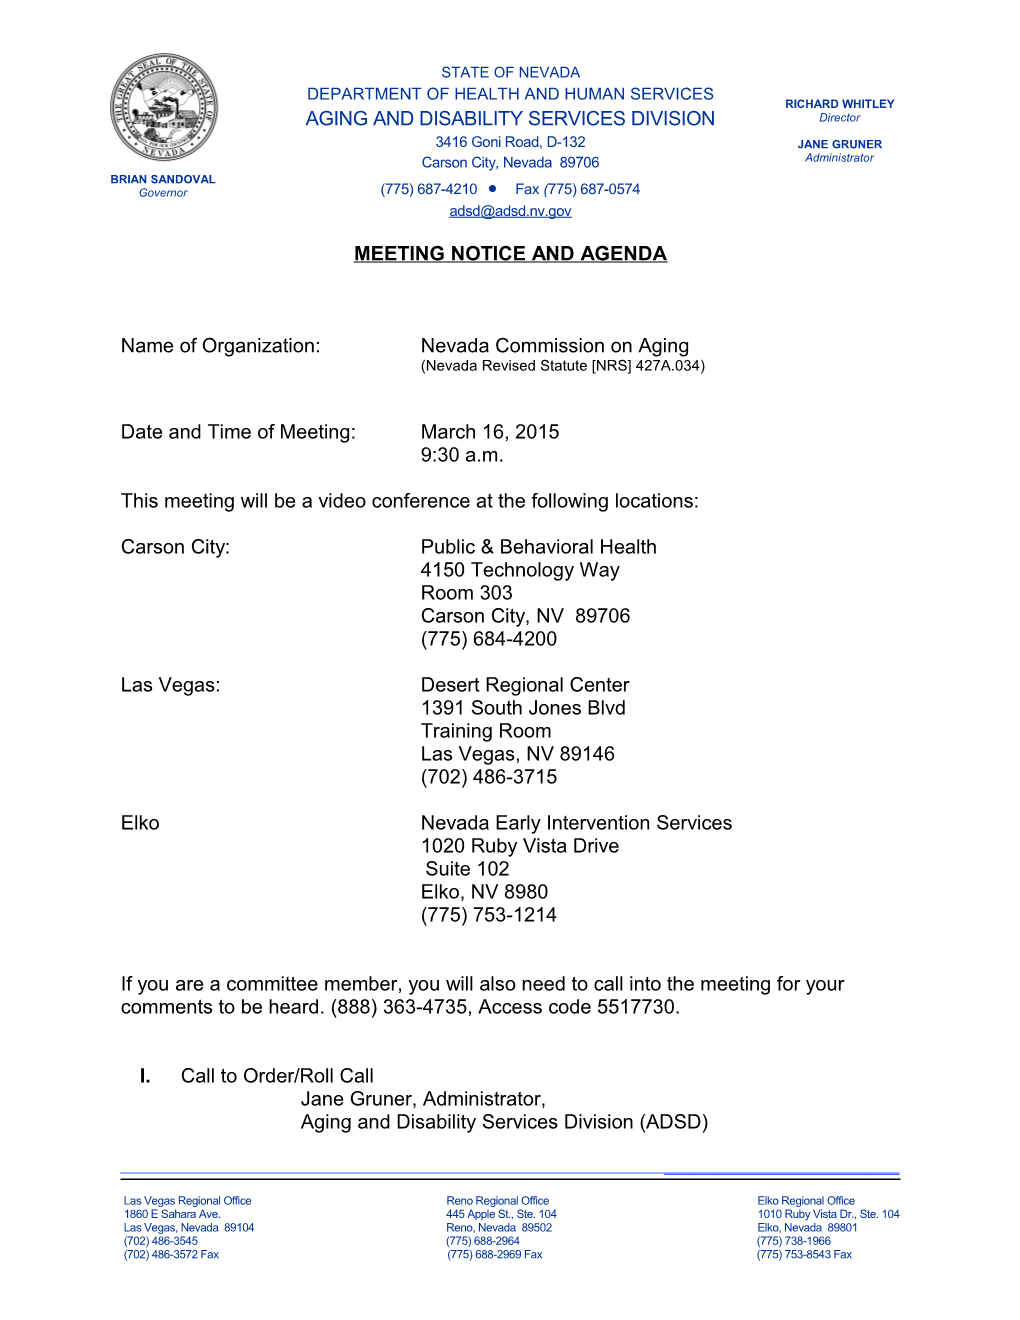 Meeting Notice and Agenda s2